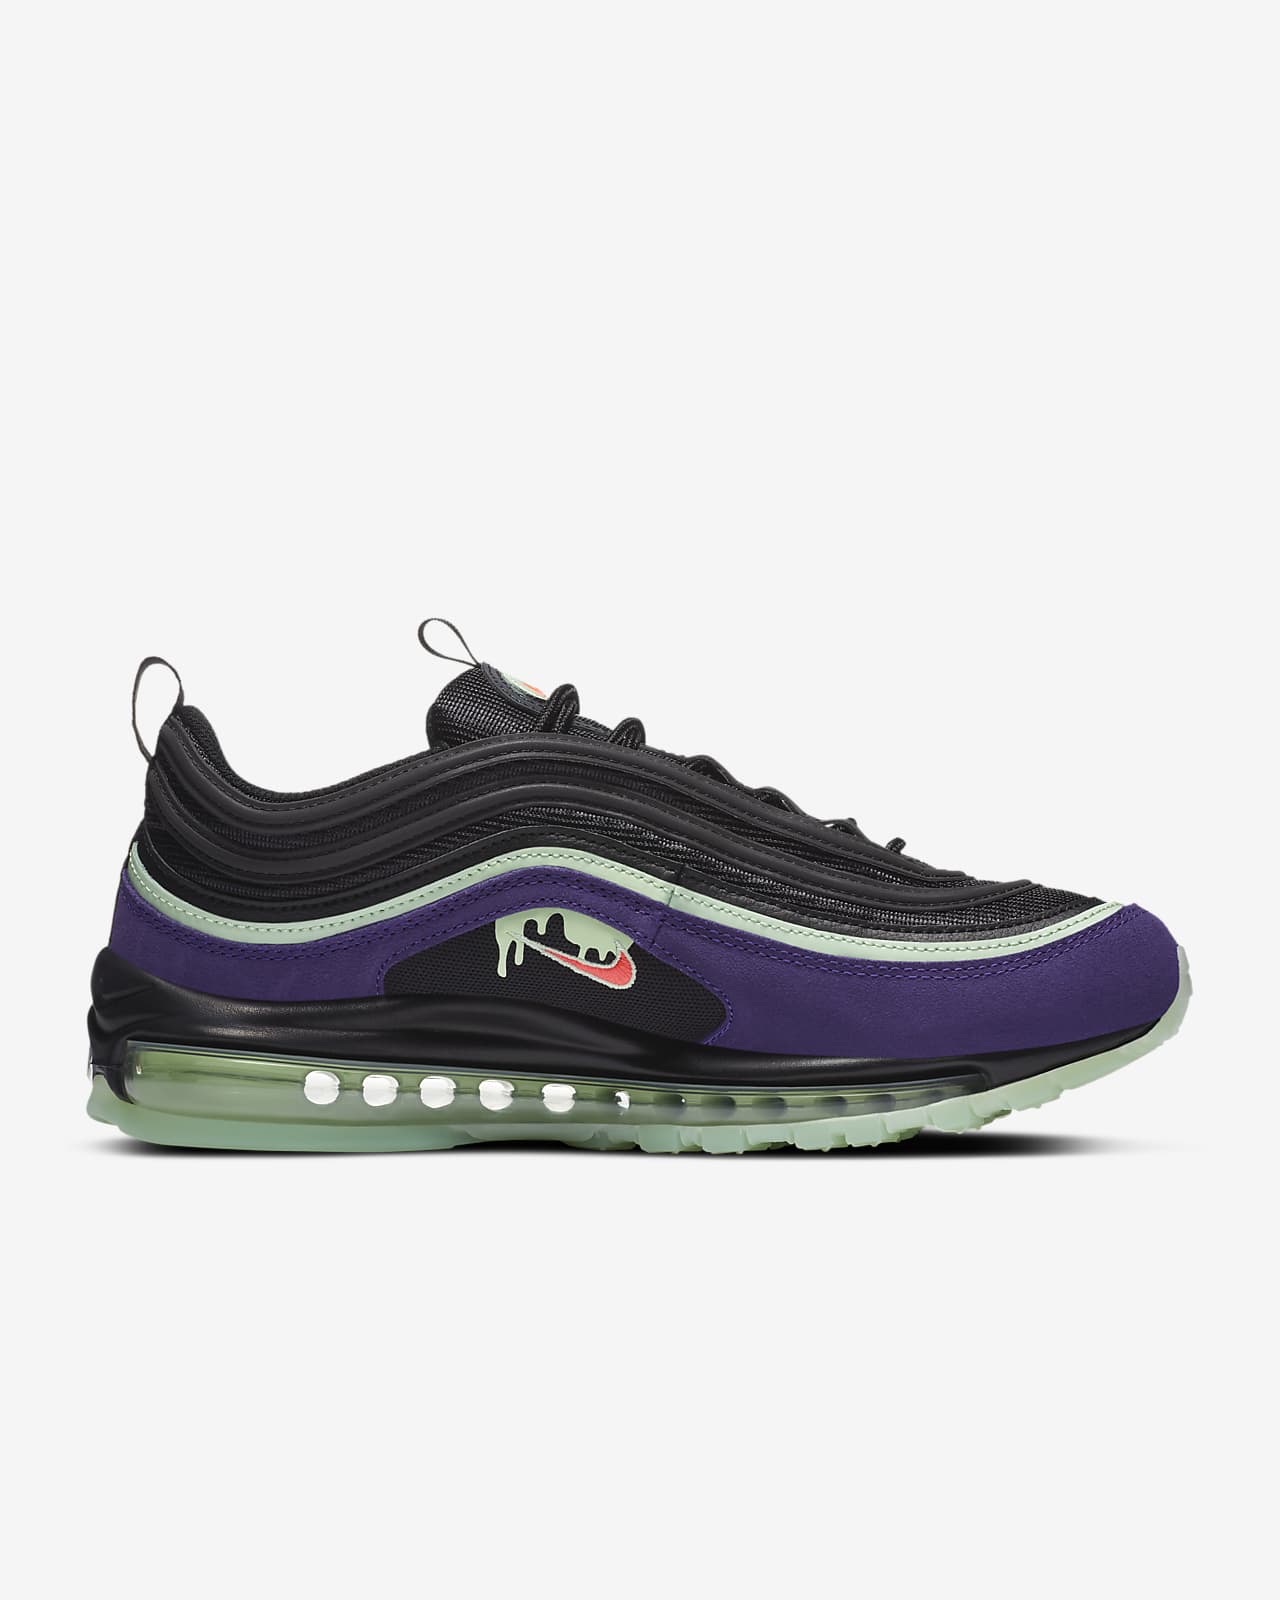 air max 97 purple and black